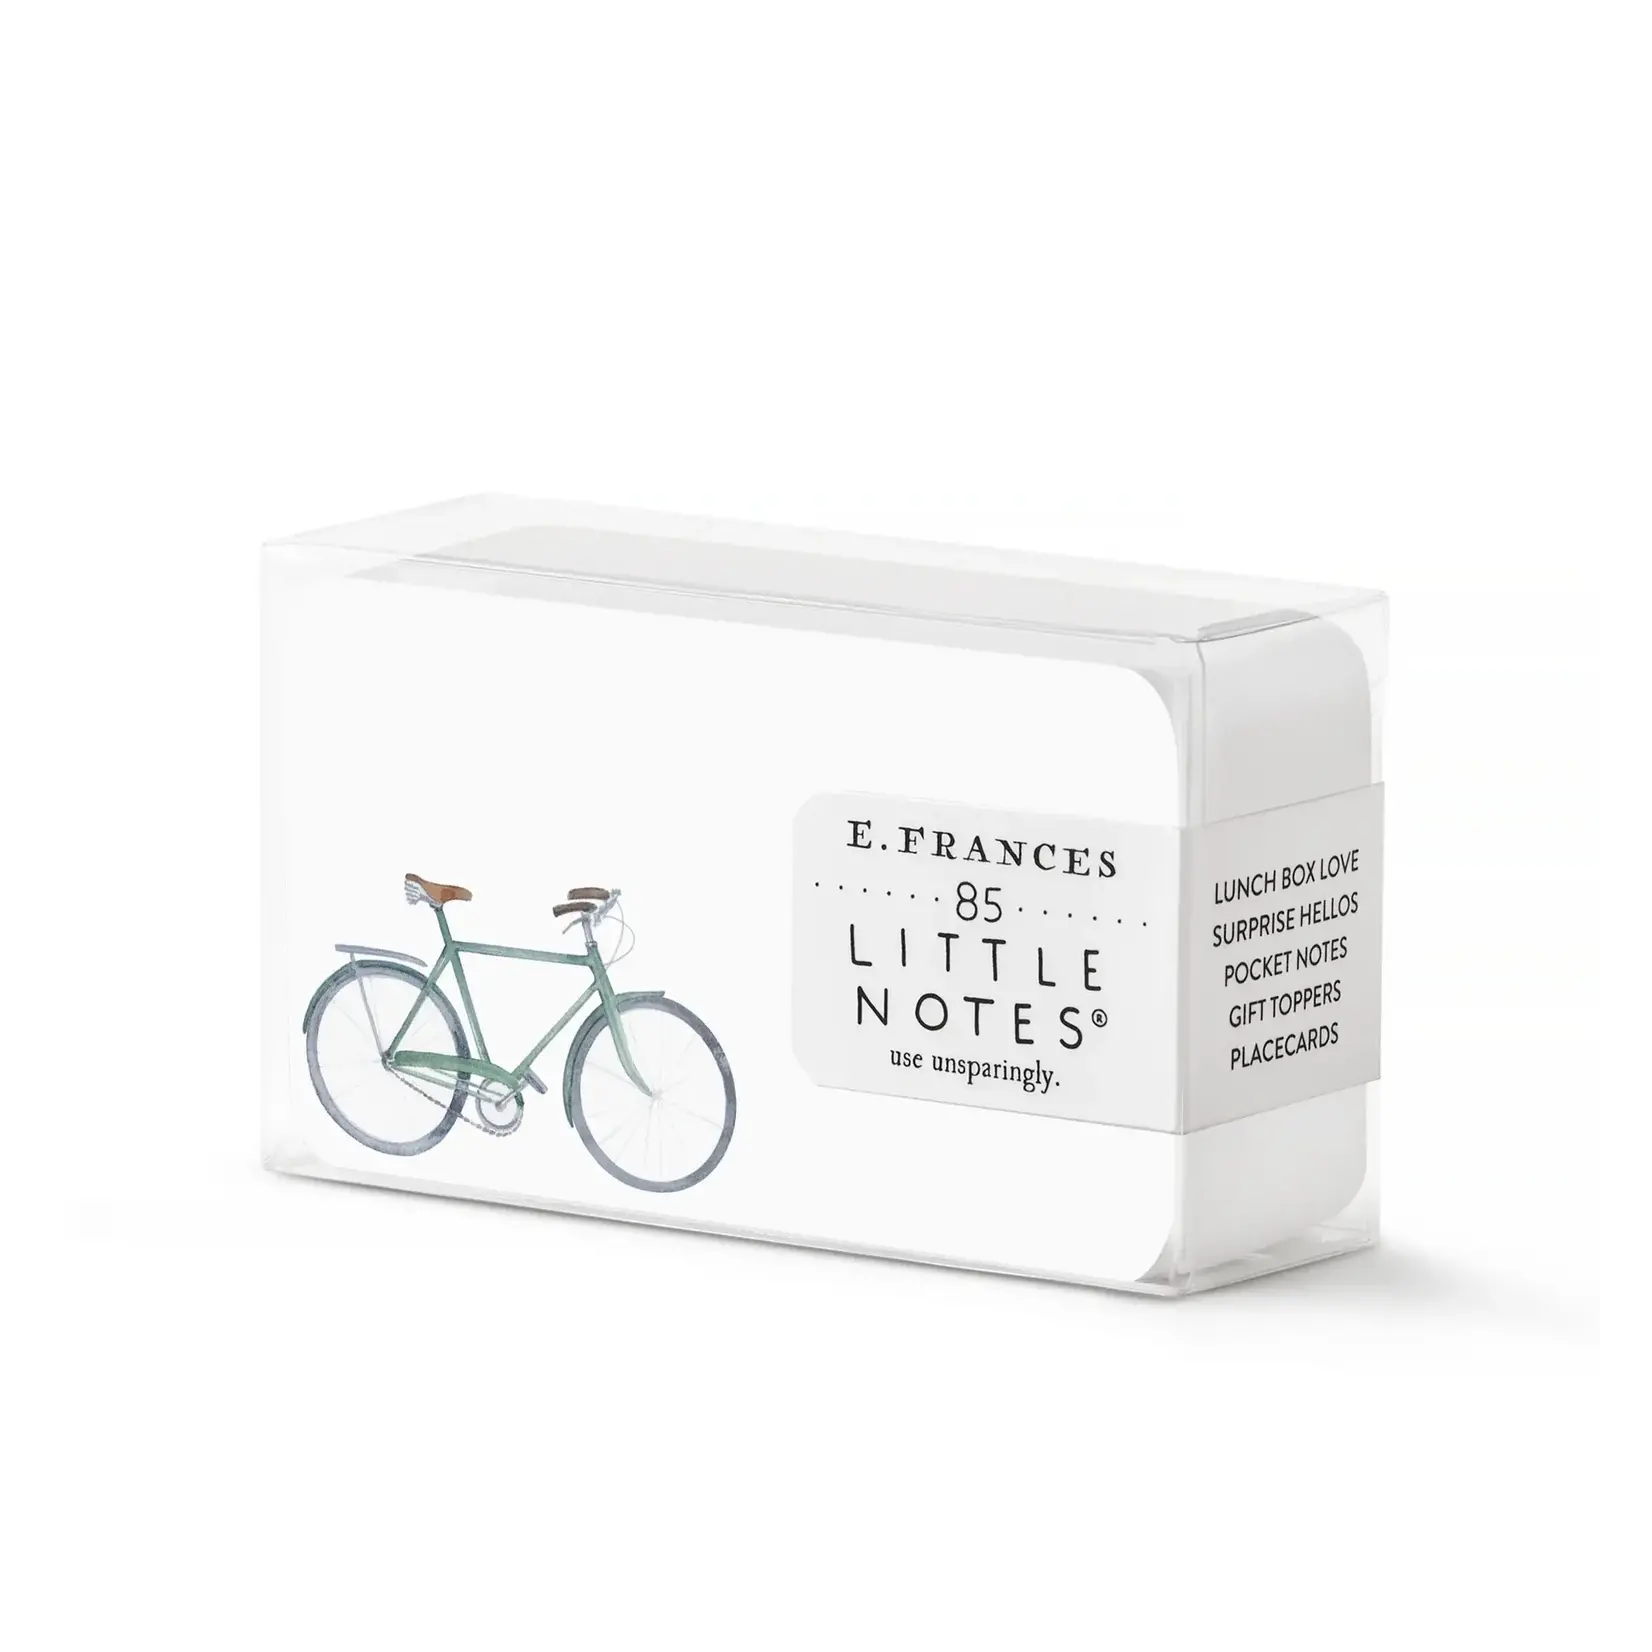 E. Frances Bicycle Little Notes